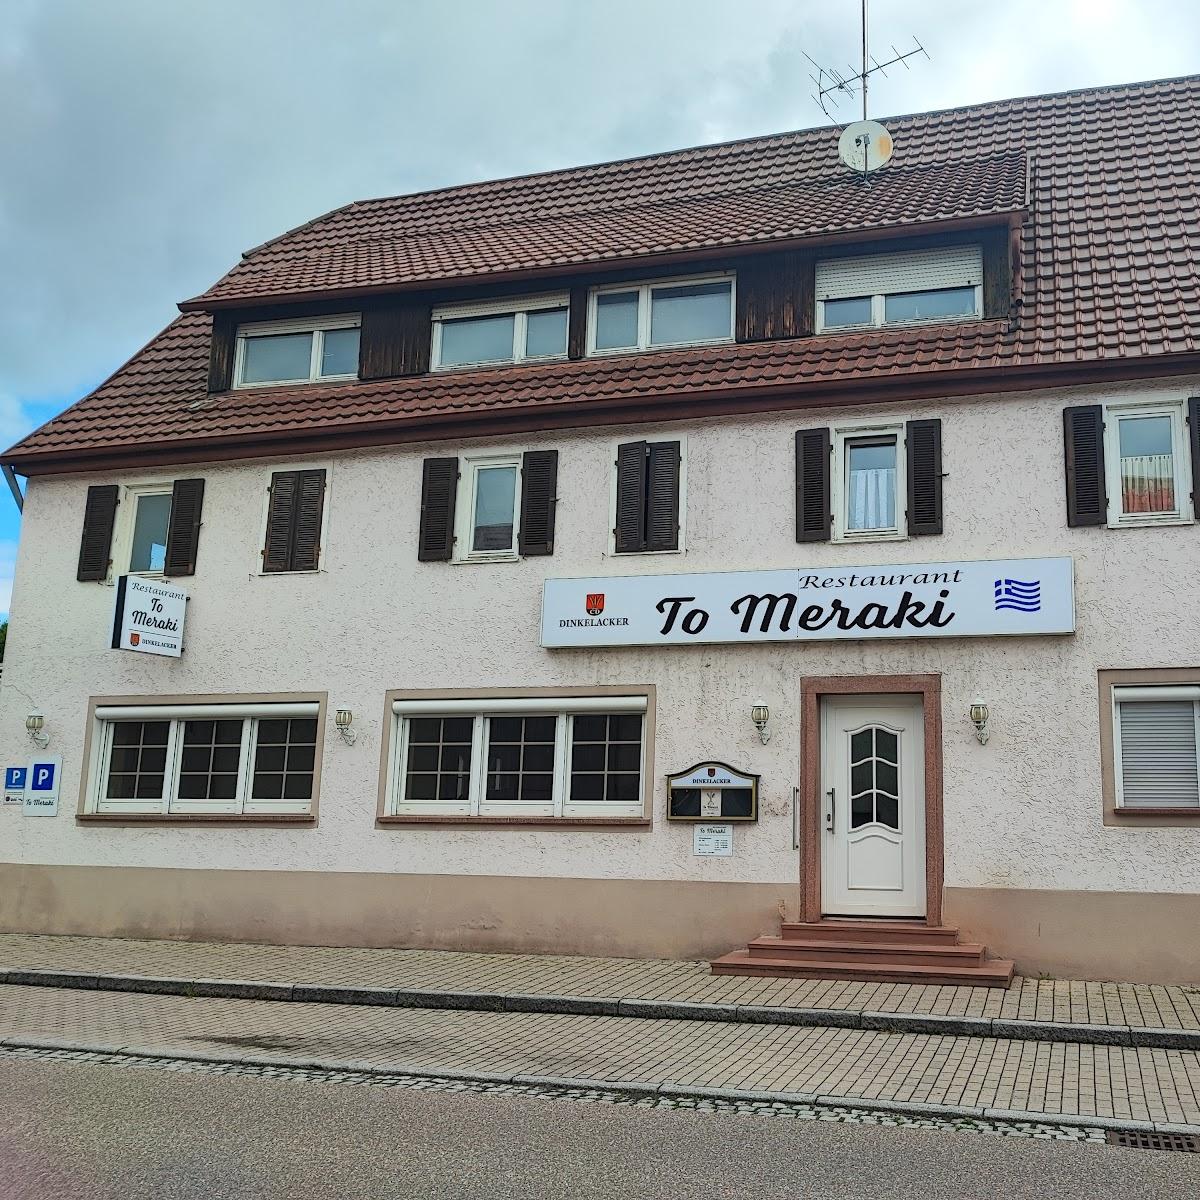 Restaurant "To Meraki" in Heimsheim